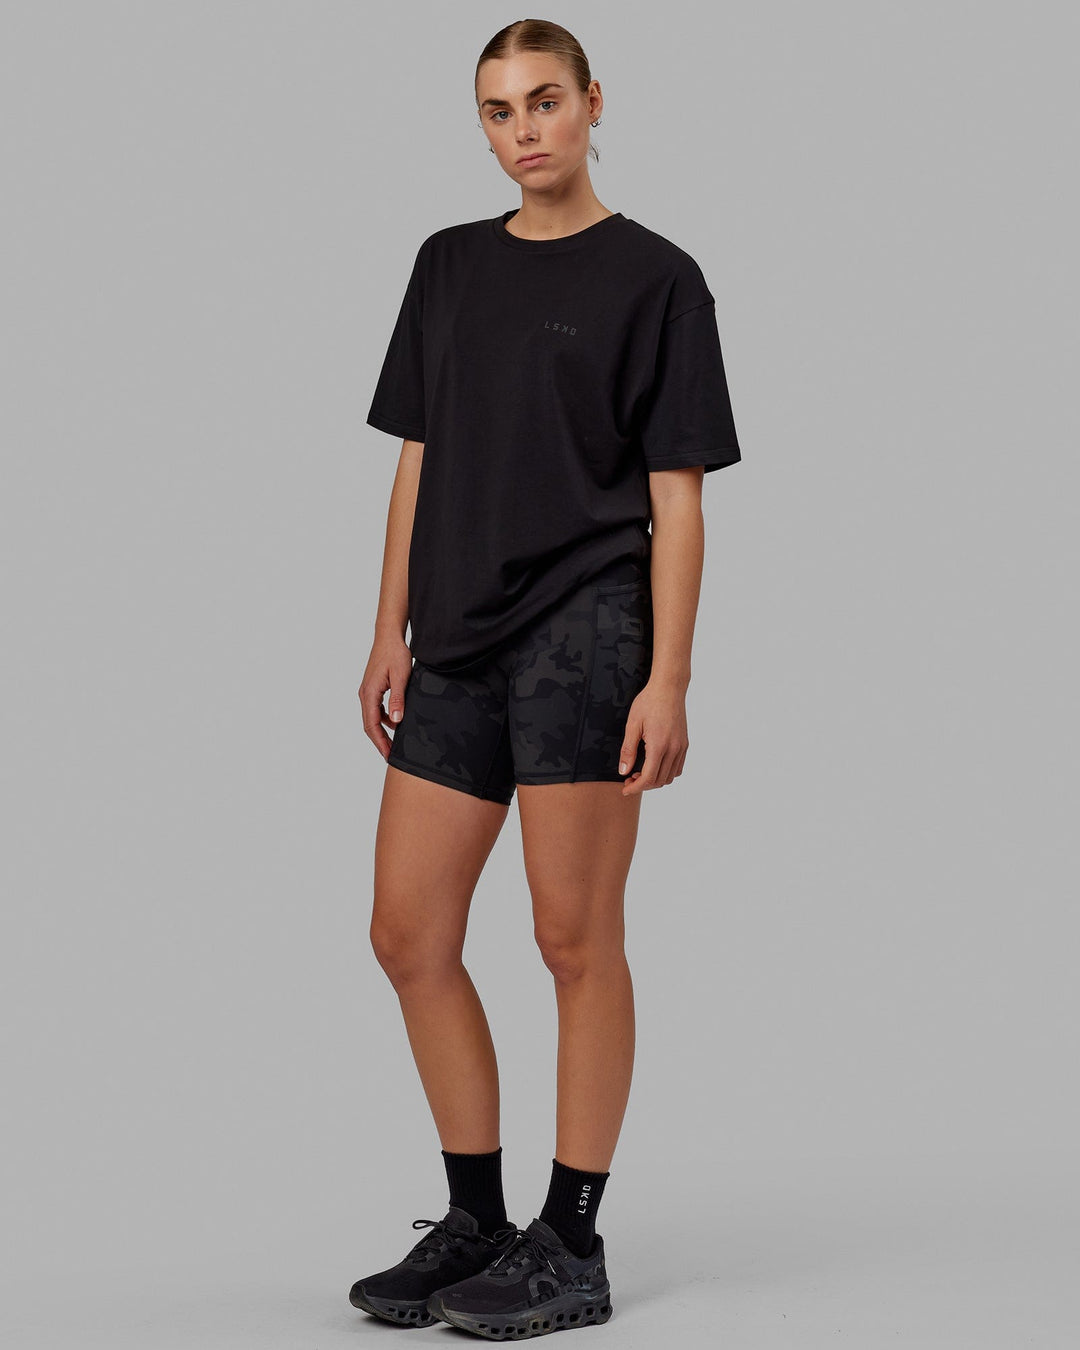 Woman wearing Unisex VS5 FLXCotton Tee Oversize - Black-Black